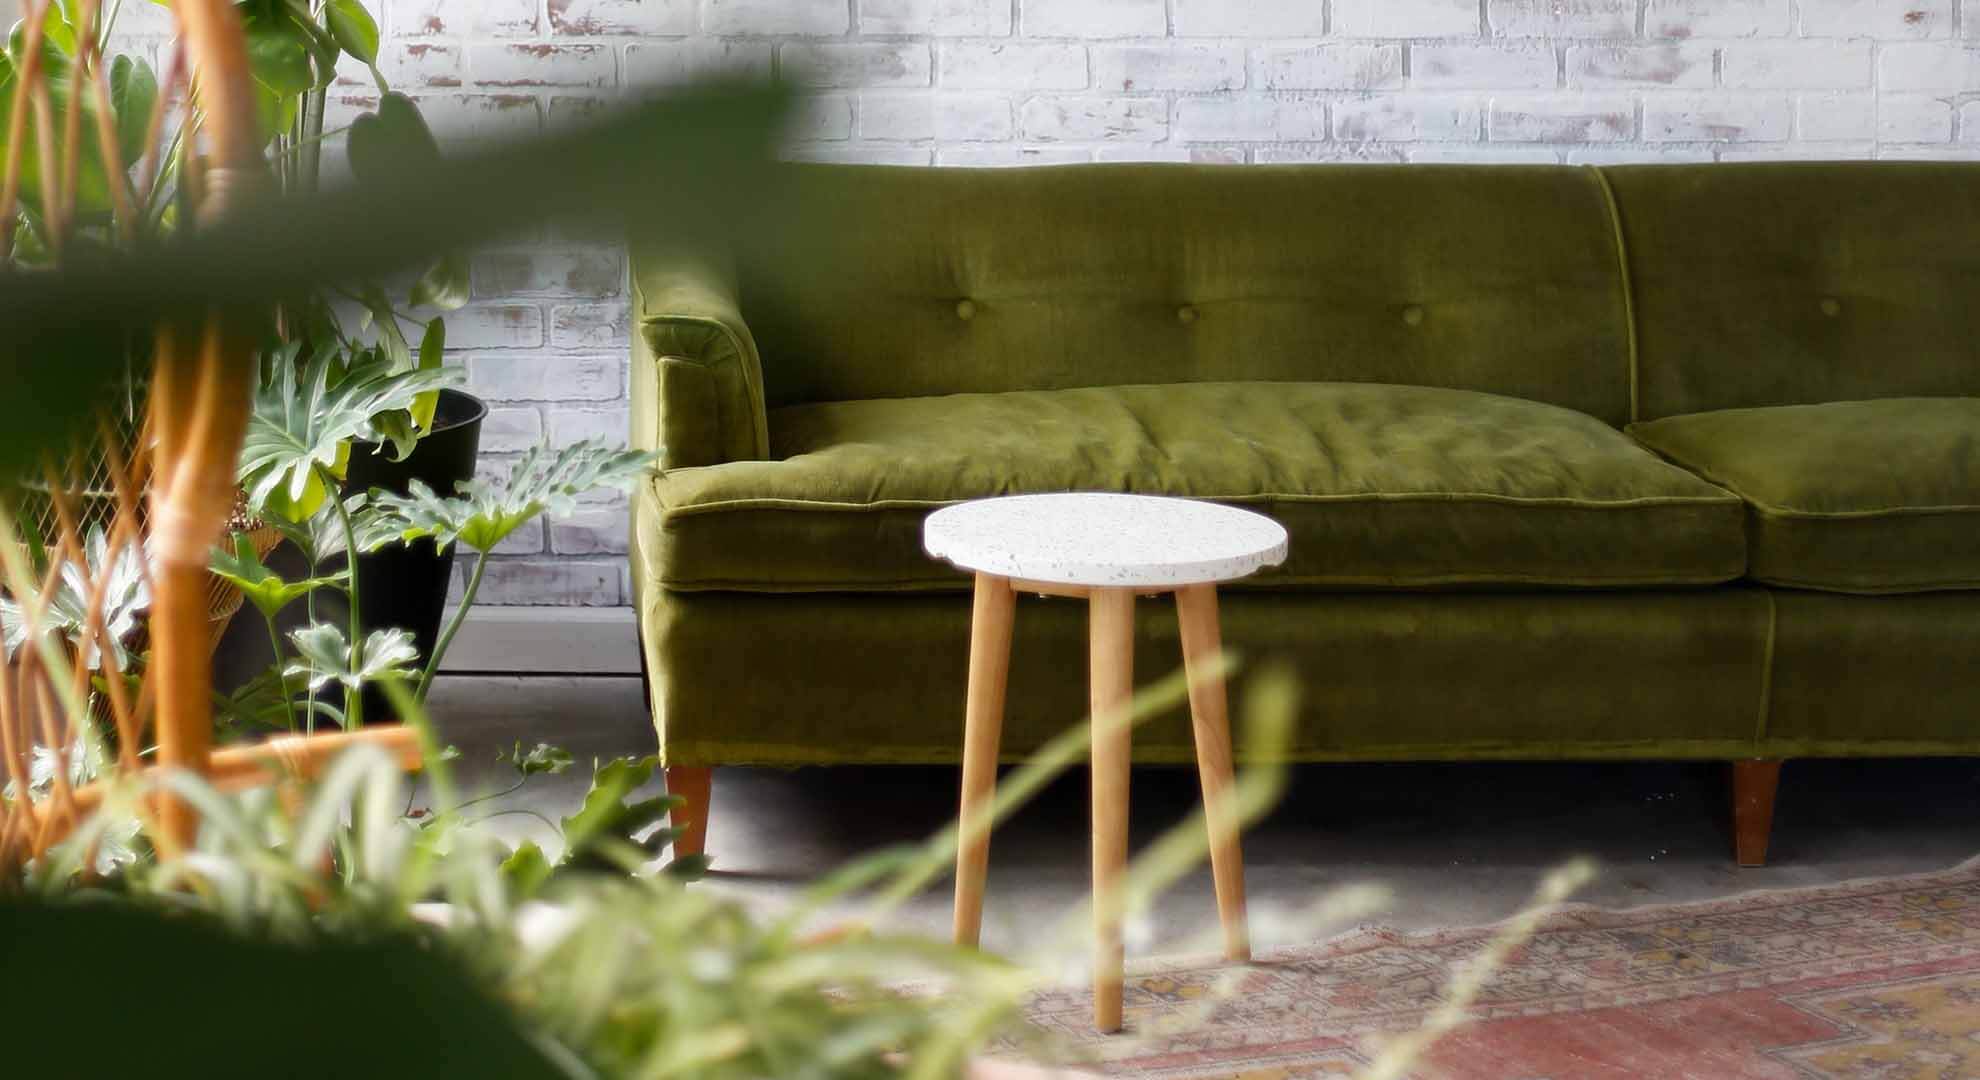 Green sofa and three legged stool with white top